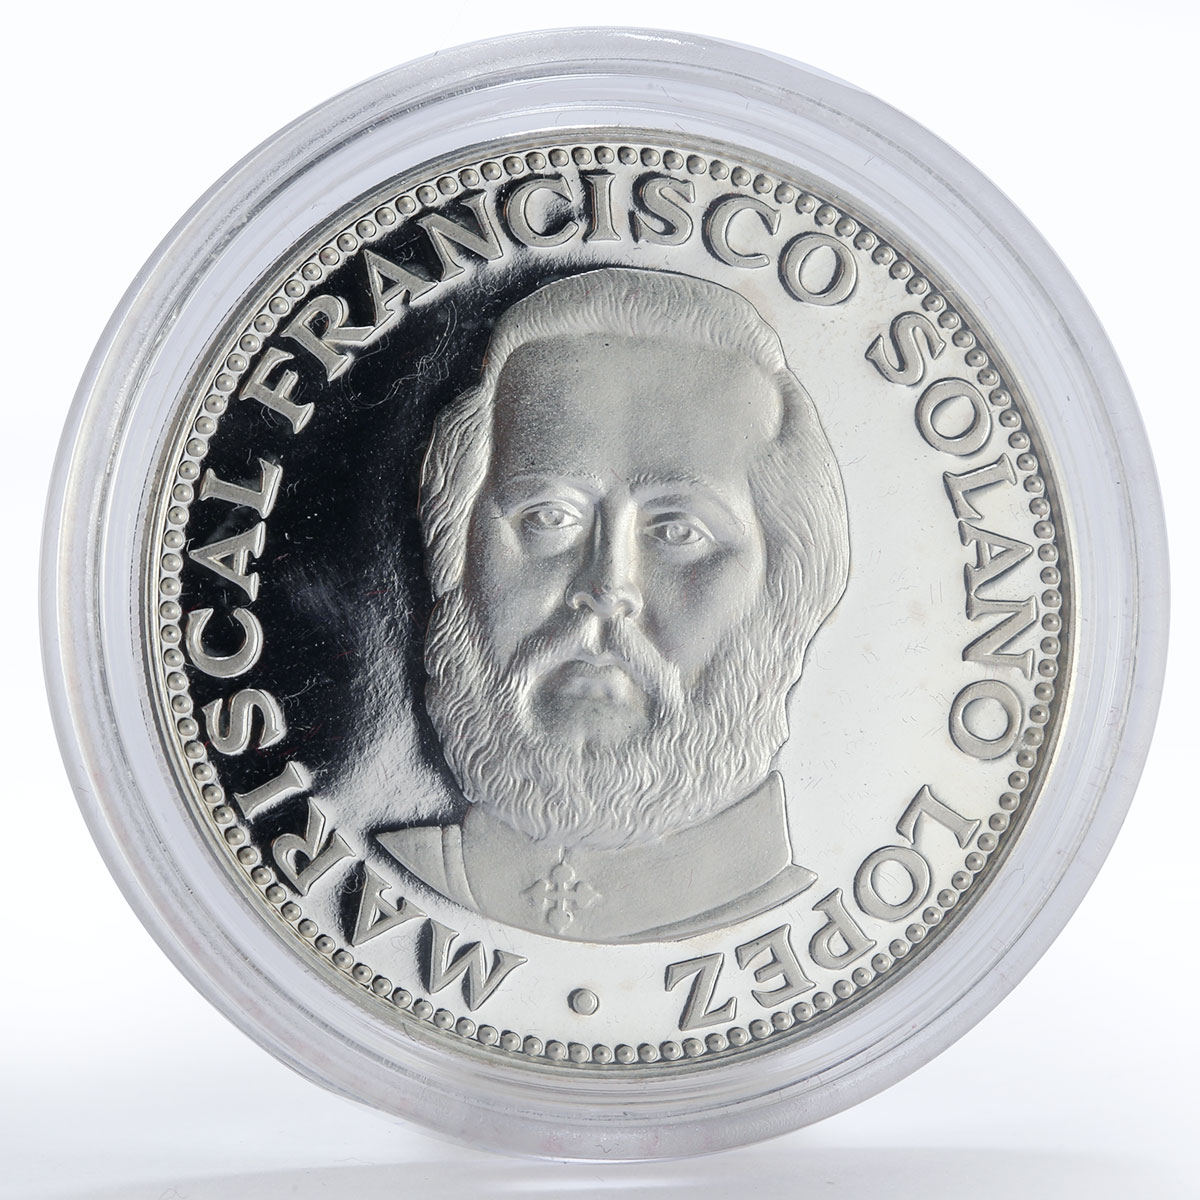 Paraguay 150 guaranies Francisco Solano Lopez arms silver coin 1973